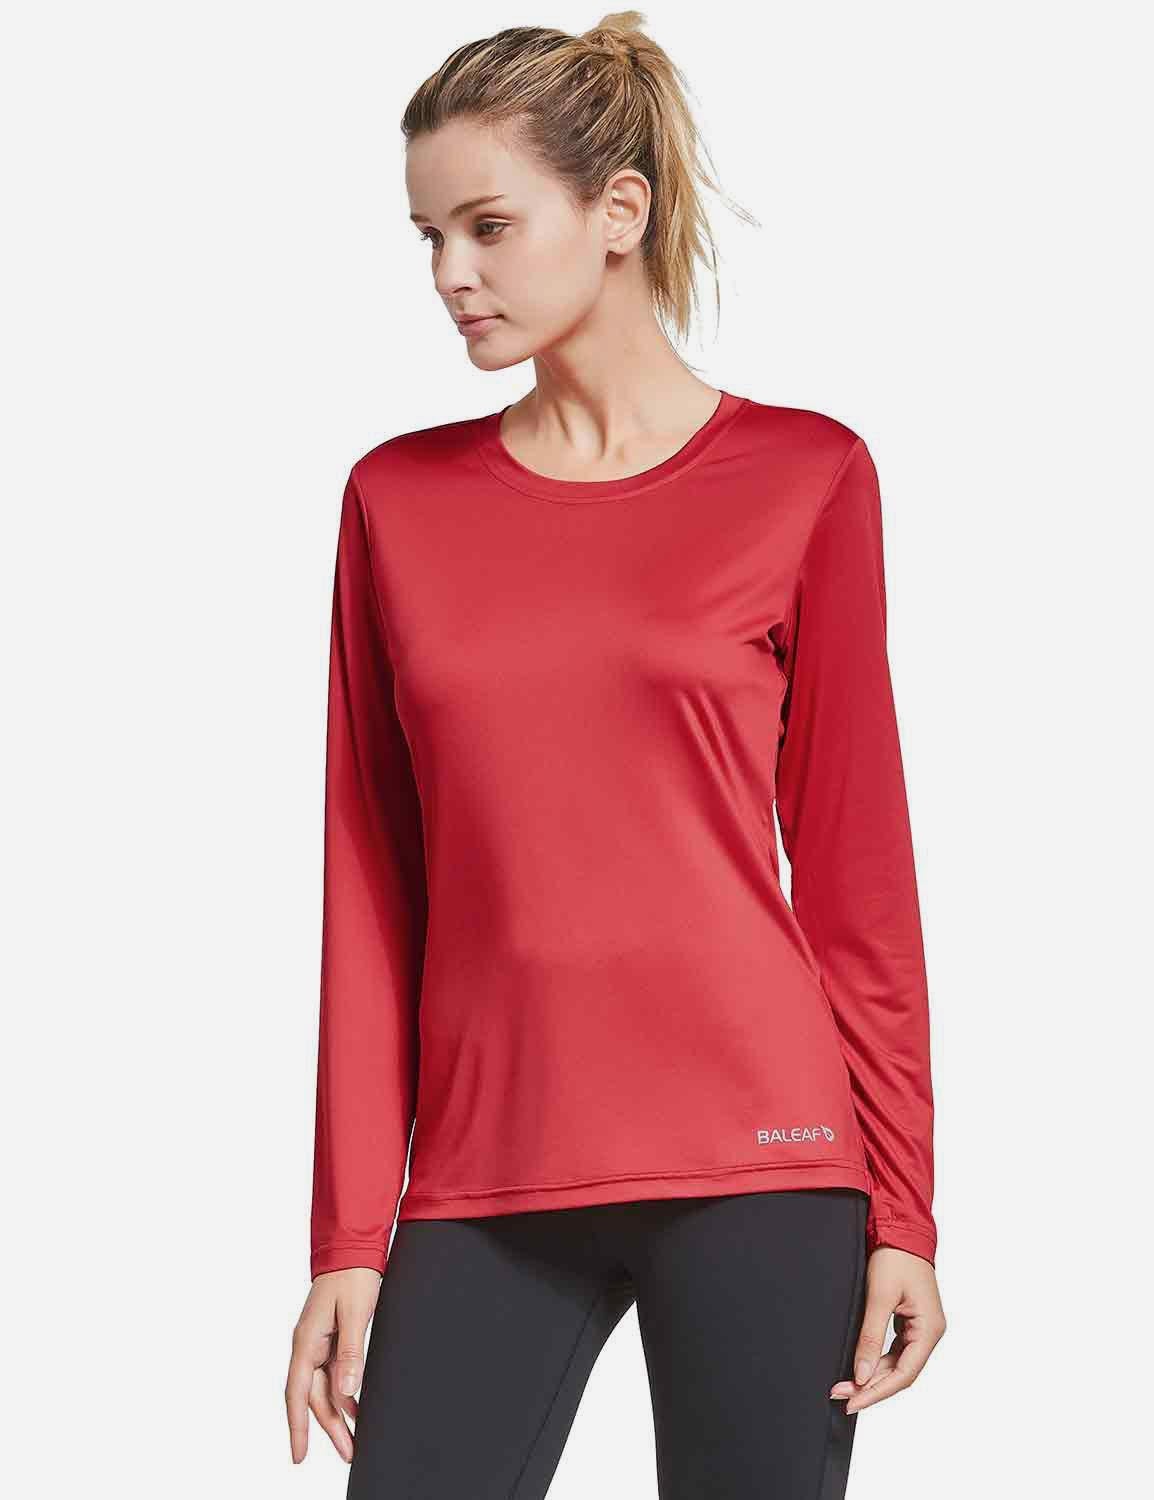 BALEAF Women's Loose Fit Tagless Workout Long Sleeved Shirt abd294 Red Front